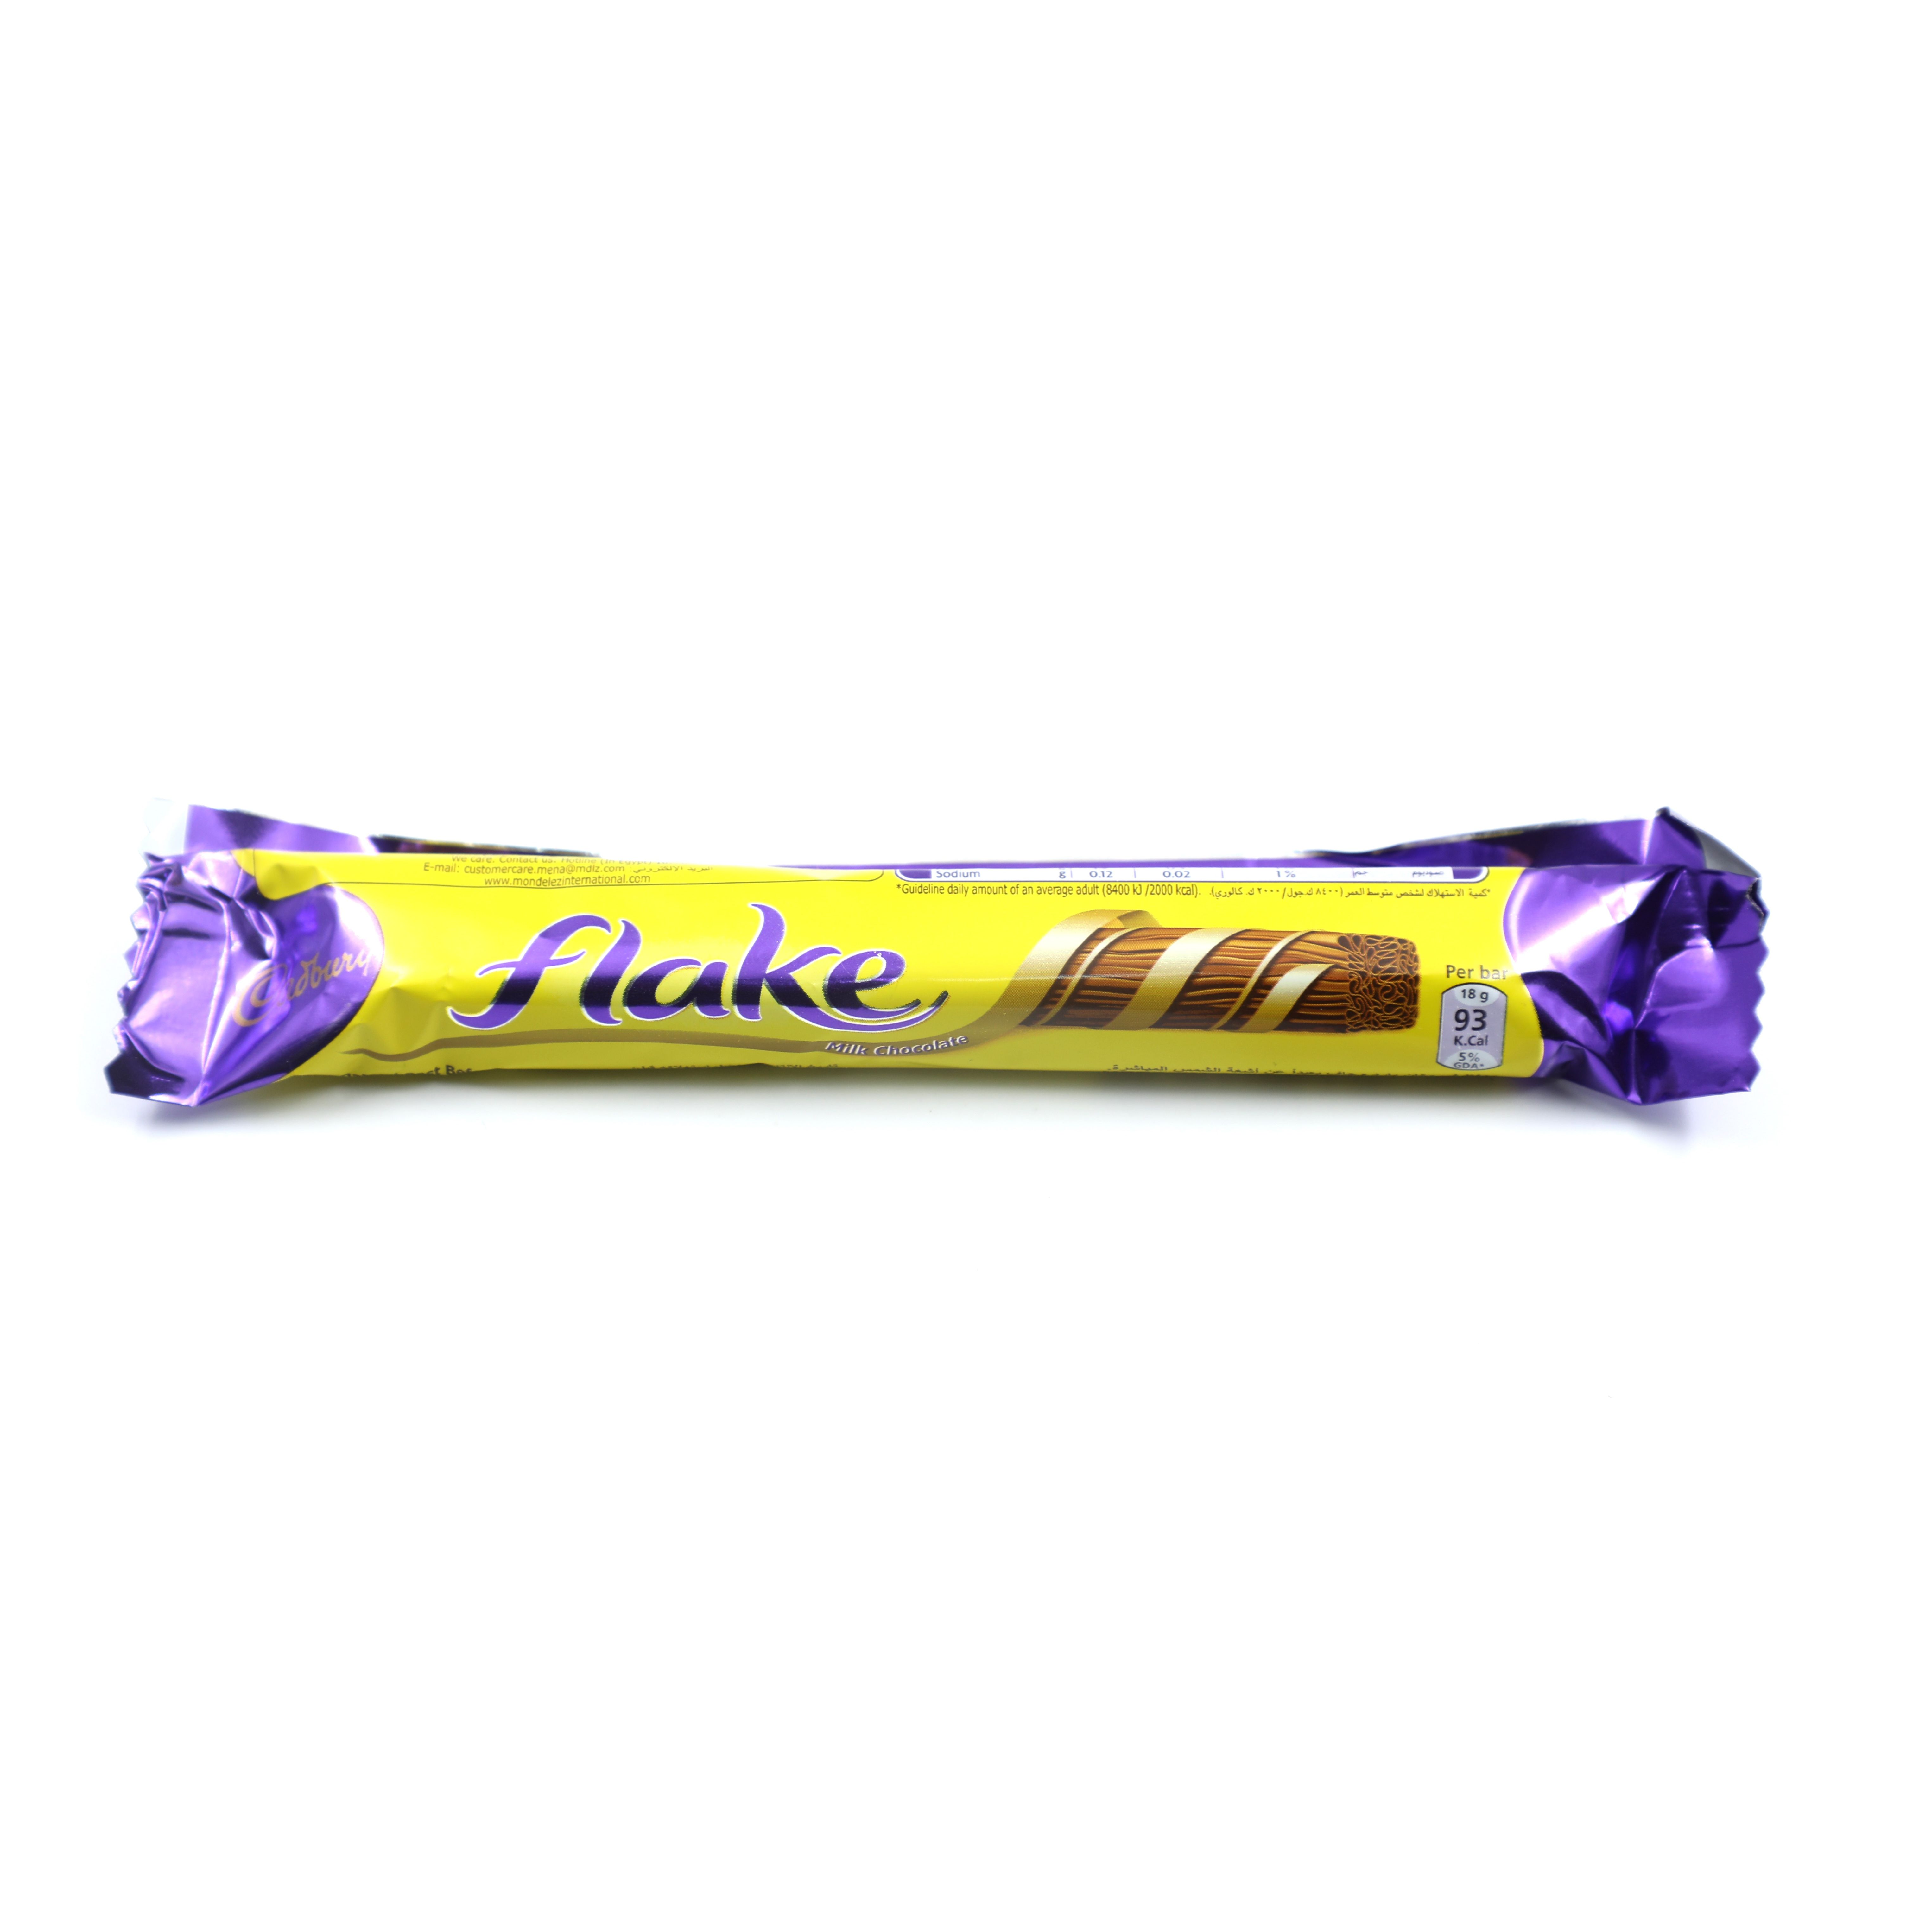 Cadbury Flake Chocolate Bar (Pack of 2) - 2.2 oz / 64 g